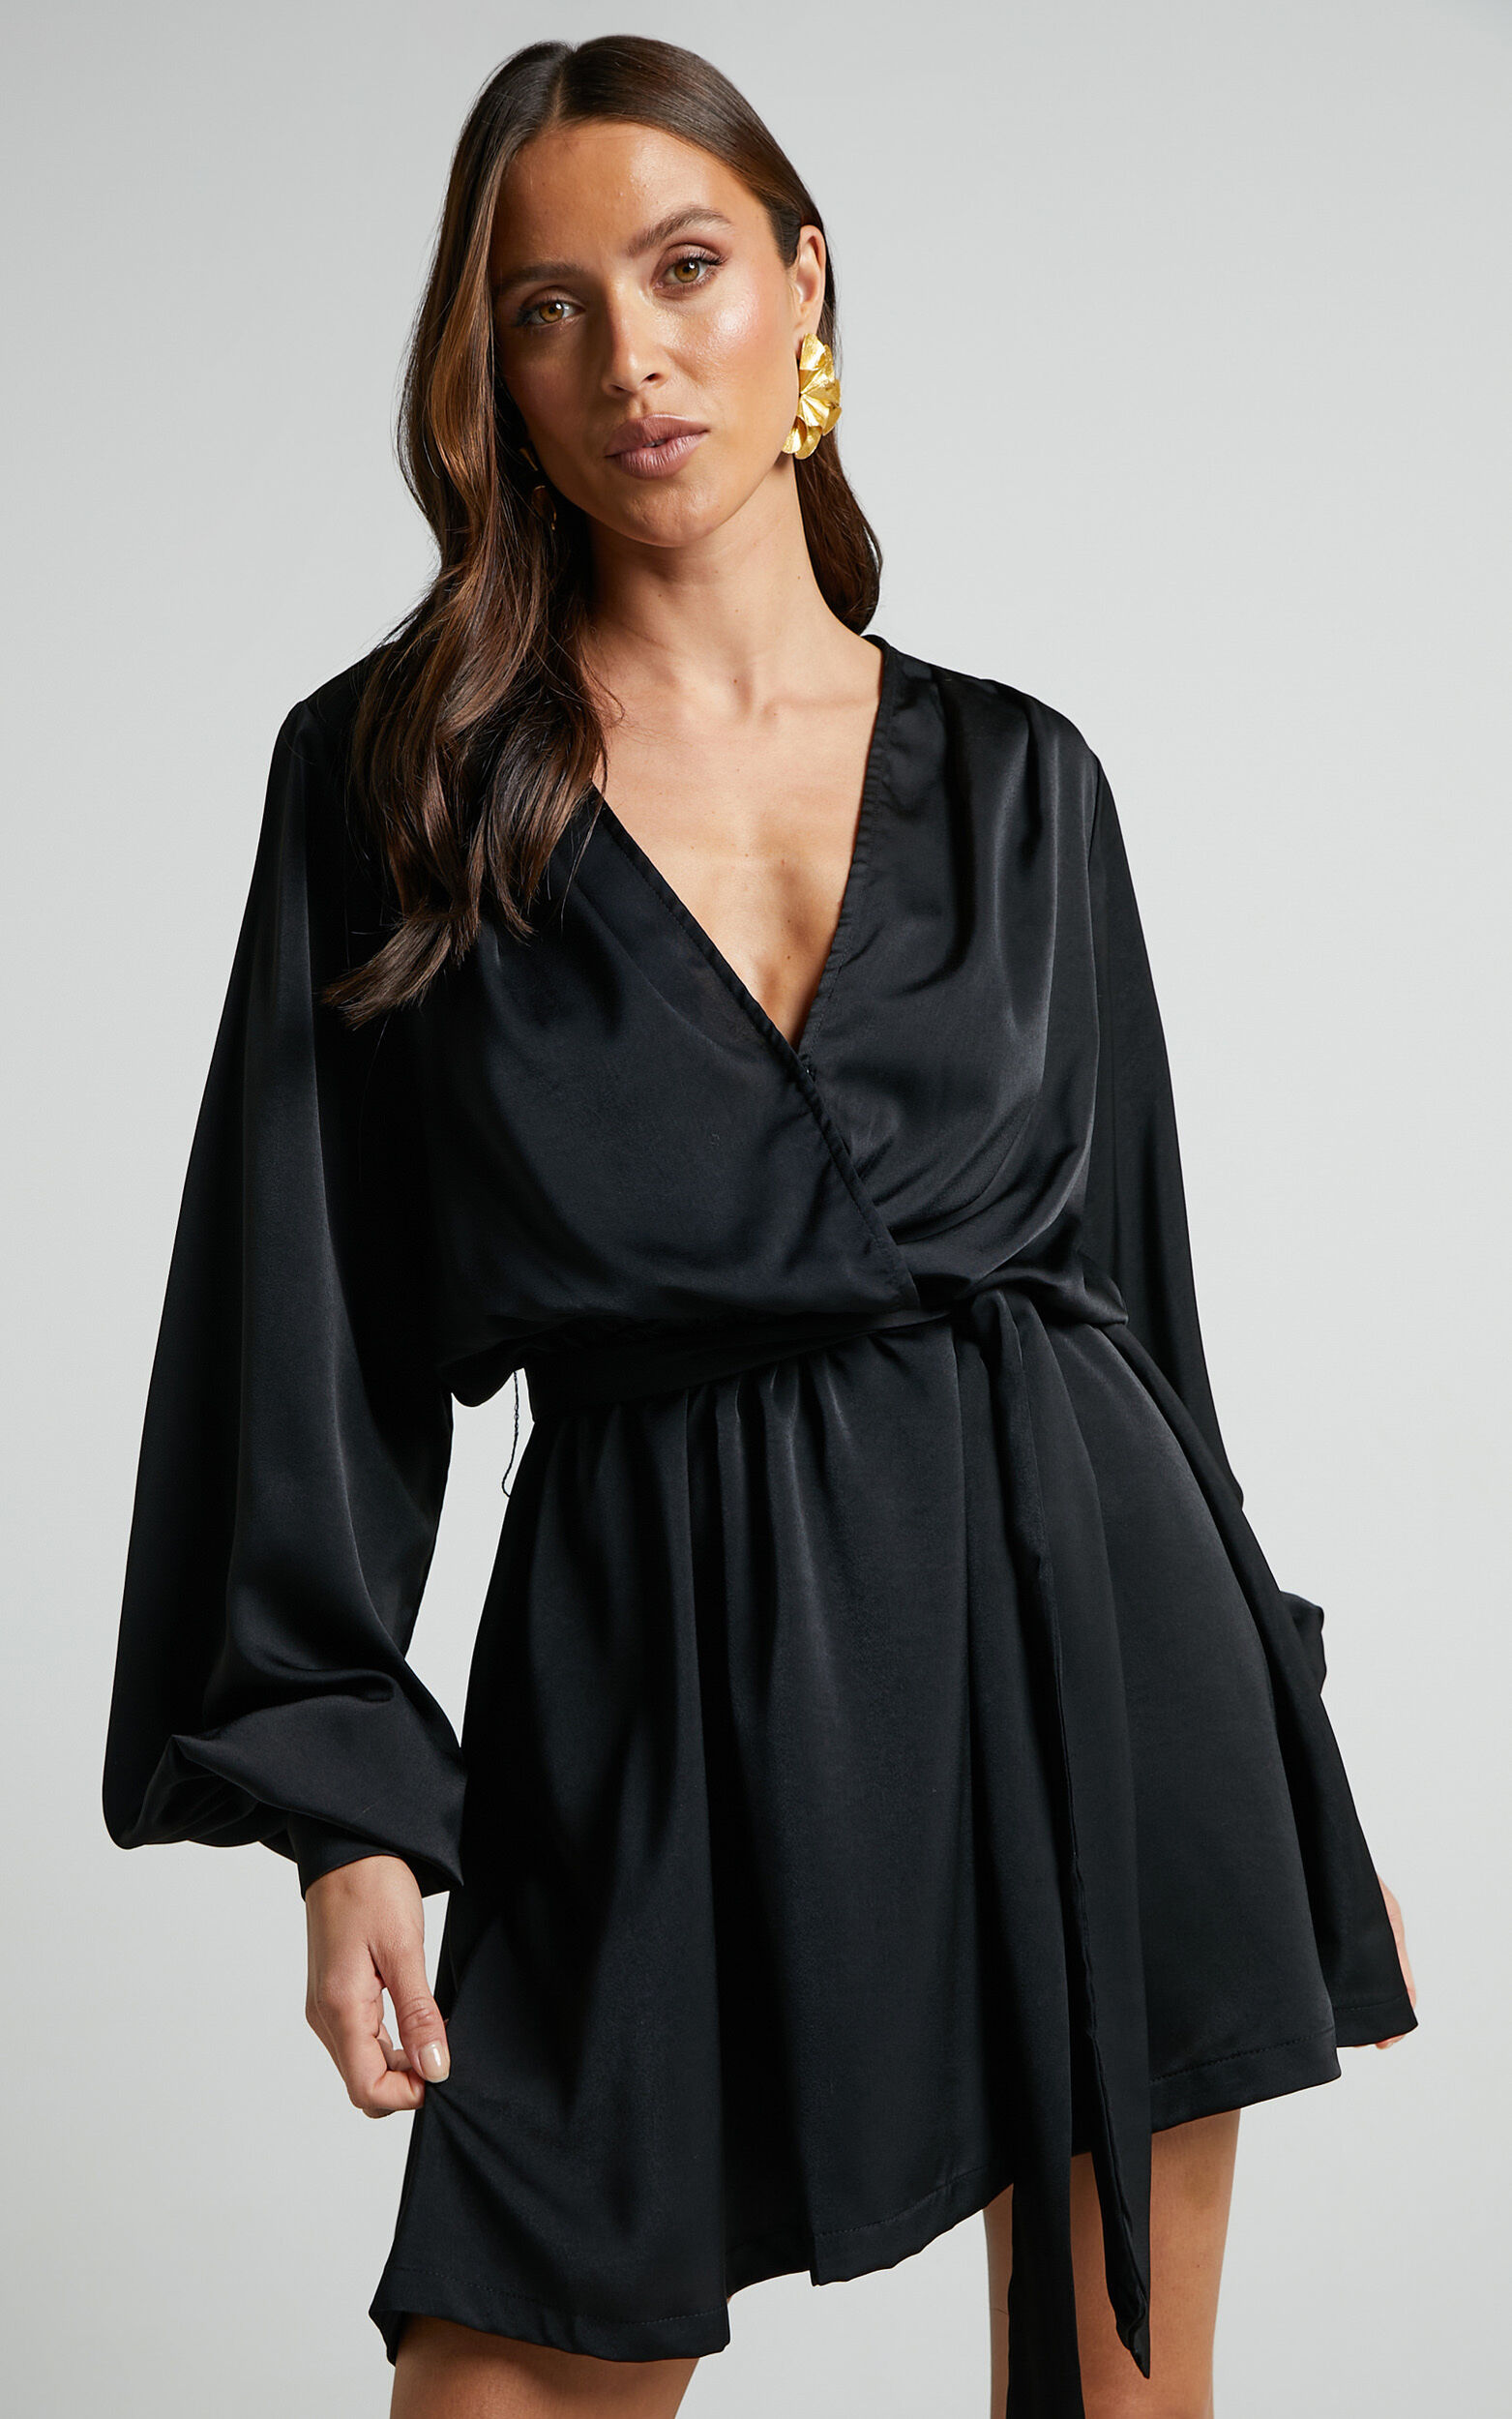 Laura Mini Dress - Long Sleeve V Neck Wrap Dress in Black - 04, BLK1